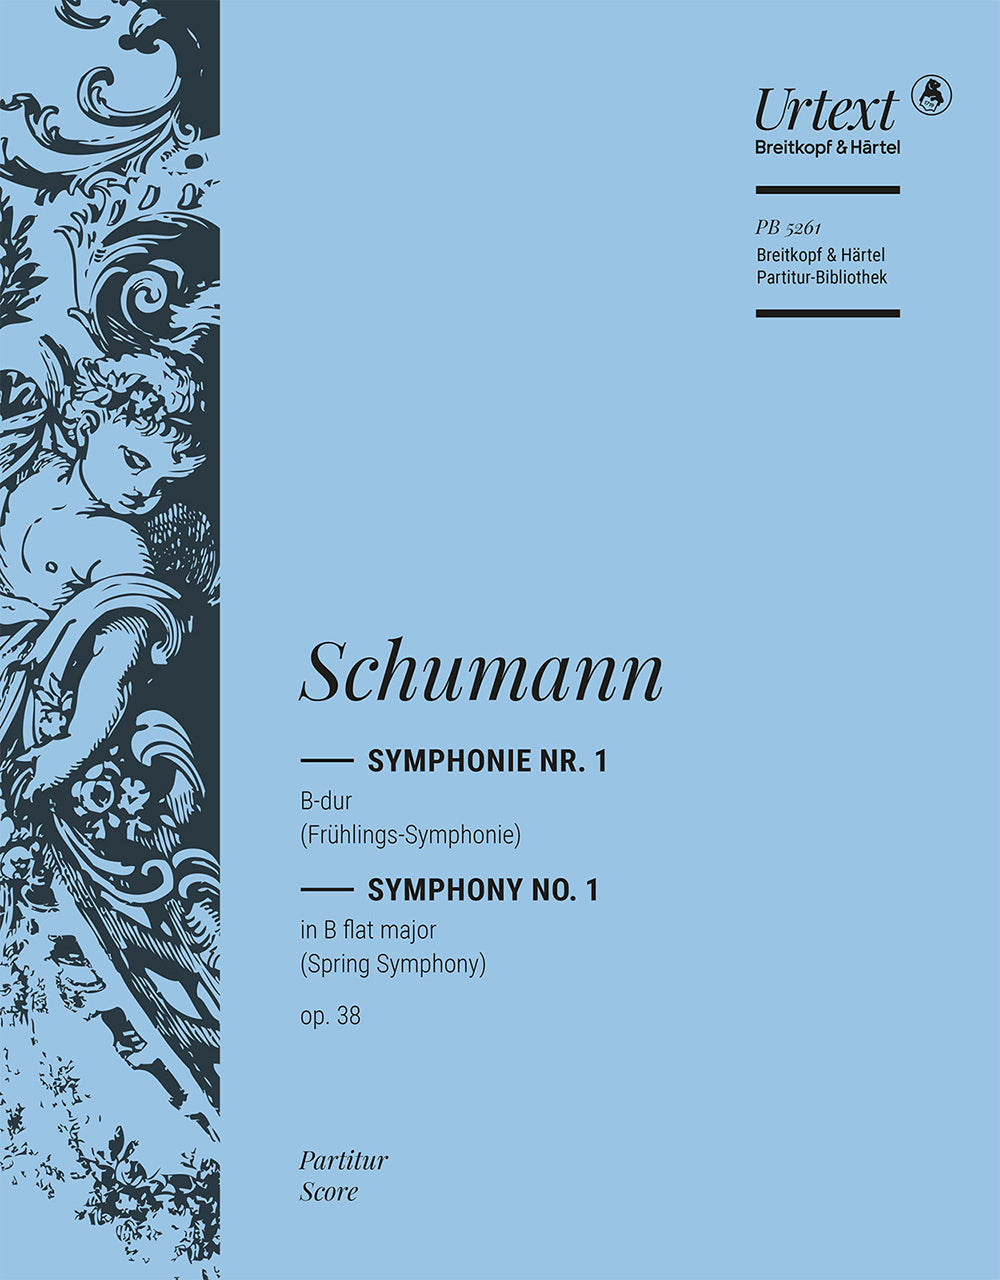 Schumann Symphony No. 1 in B flat major Op. 38